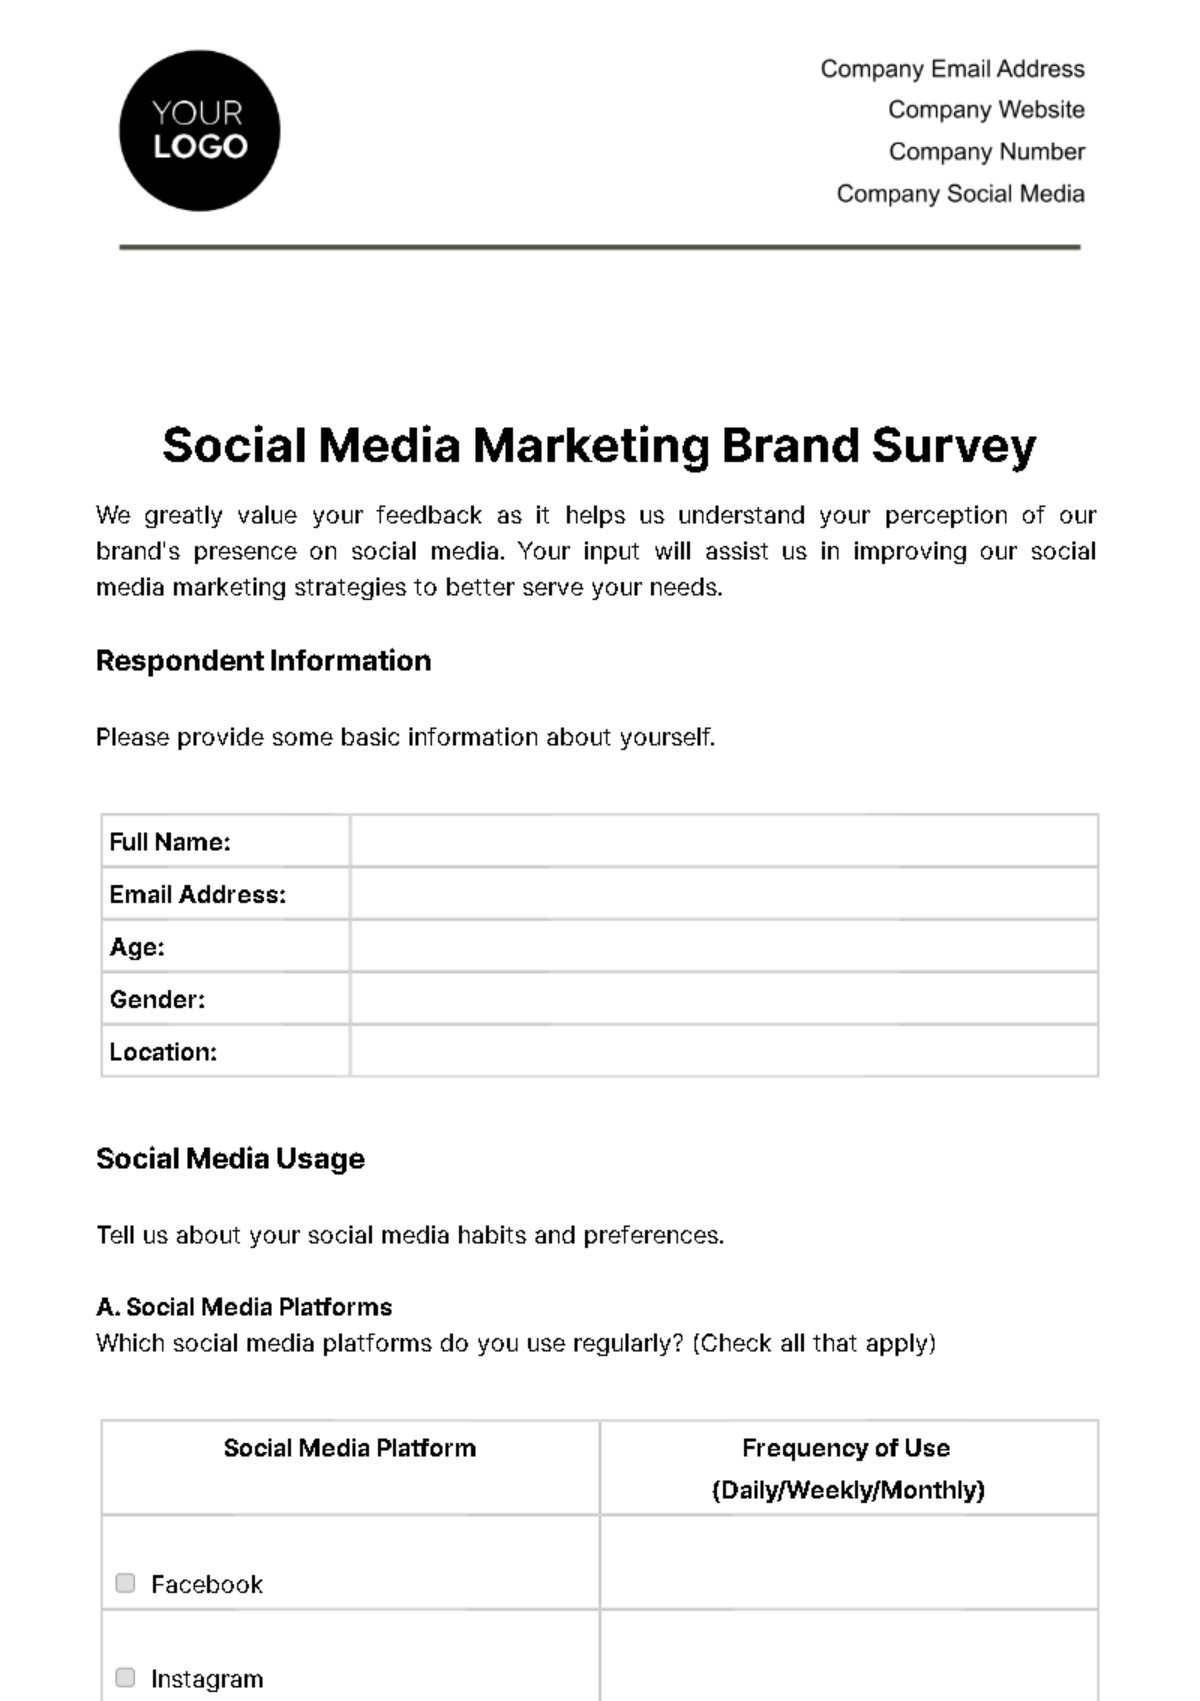 Free Social Media Marketing Brand Survey Template